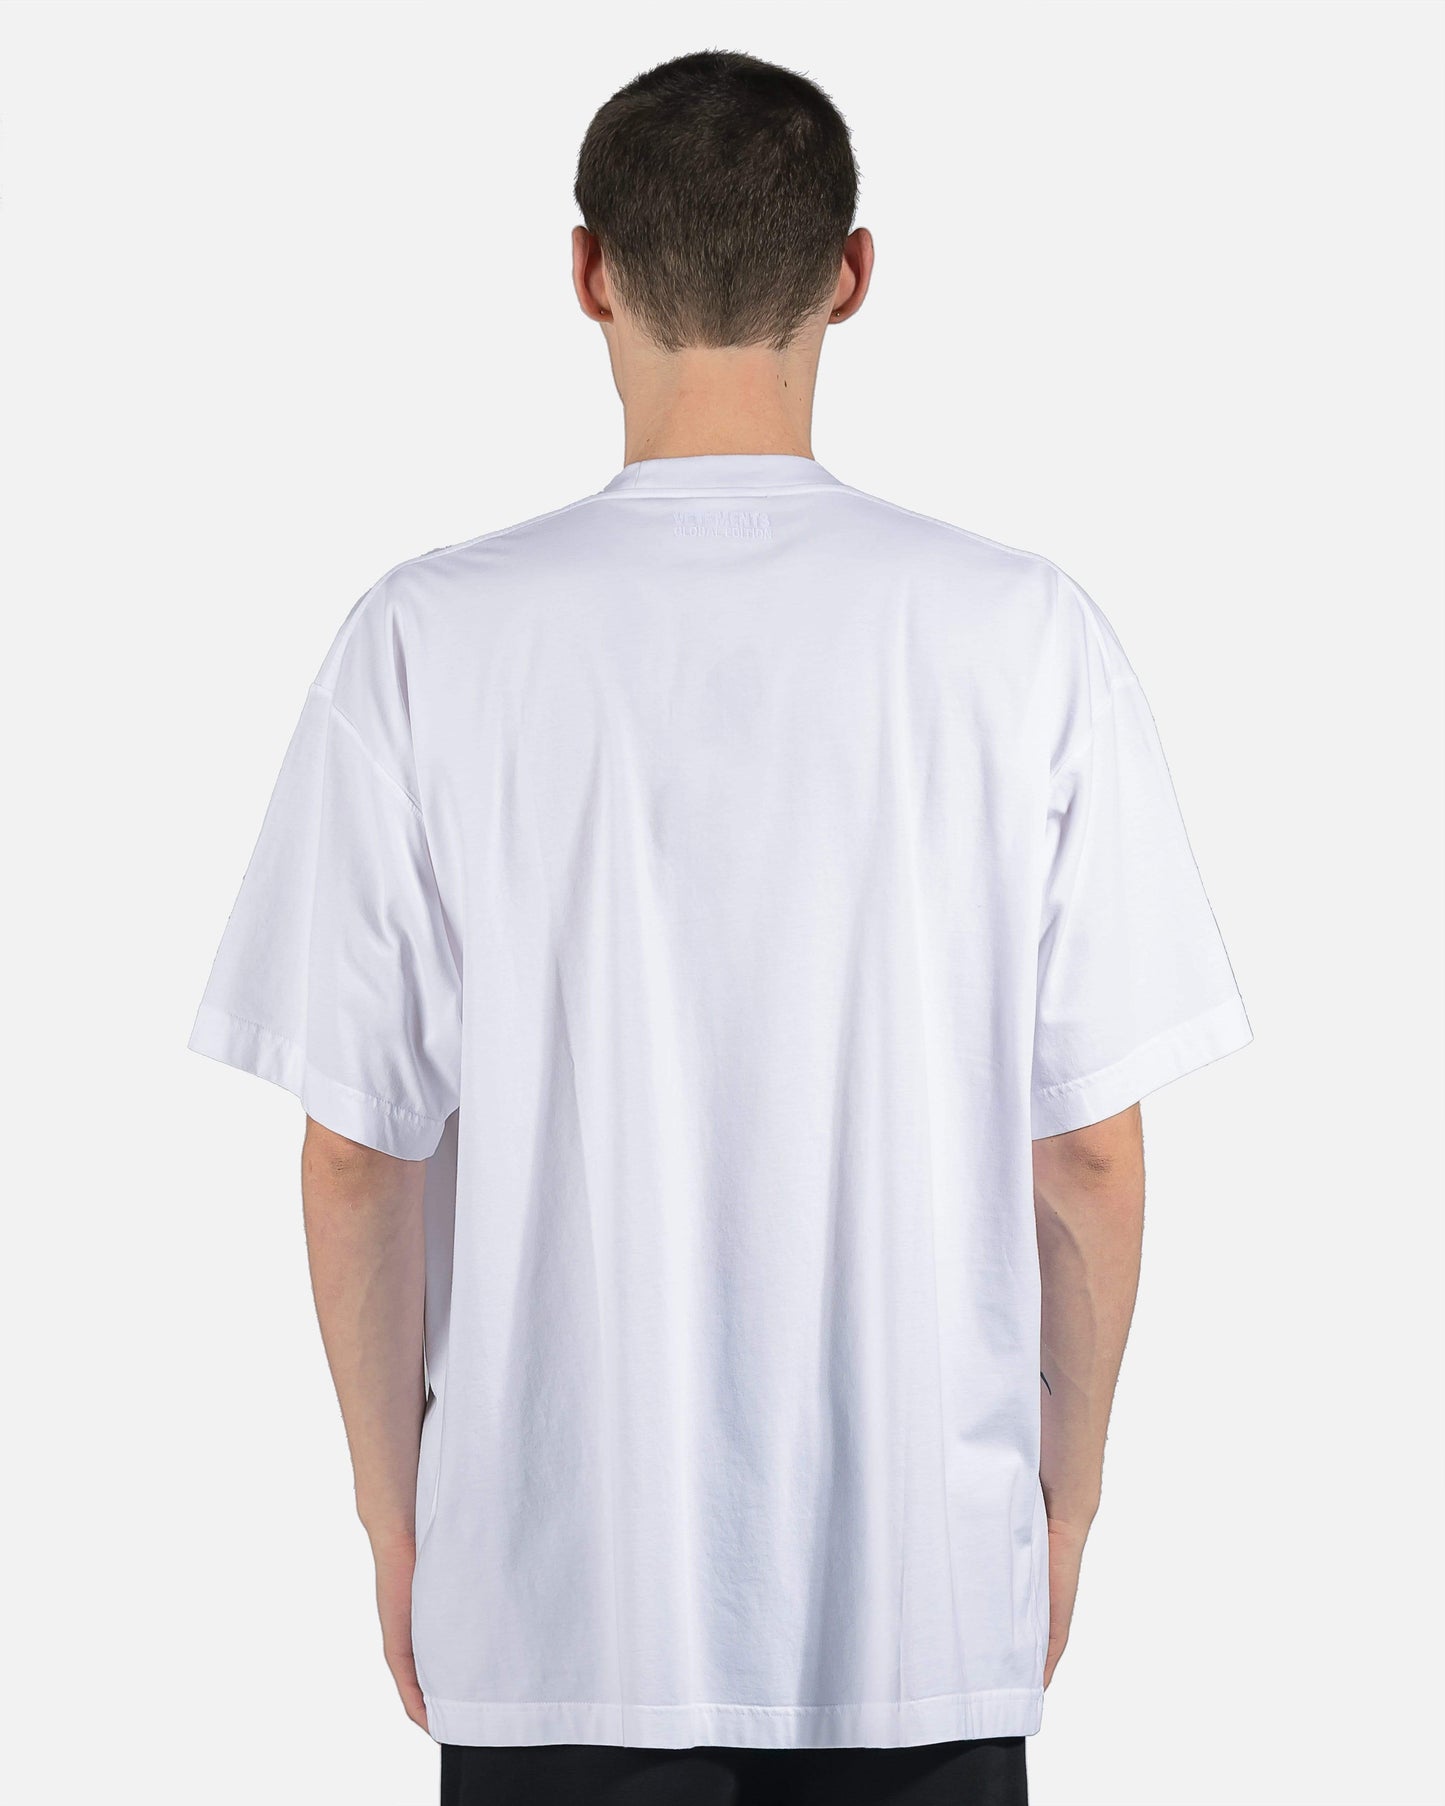 VETEMENTS Men's T-Shirts Rainbow Flag Logo Tee in White